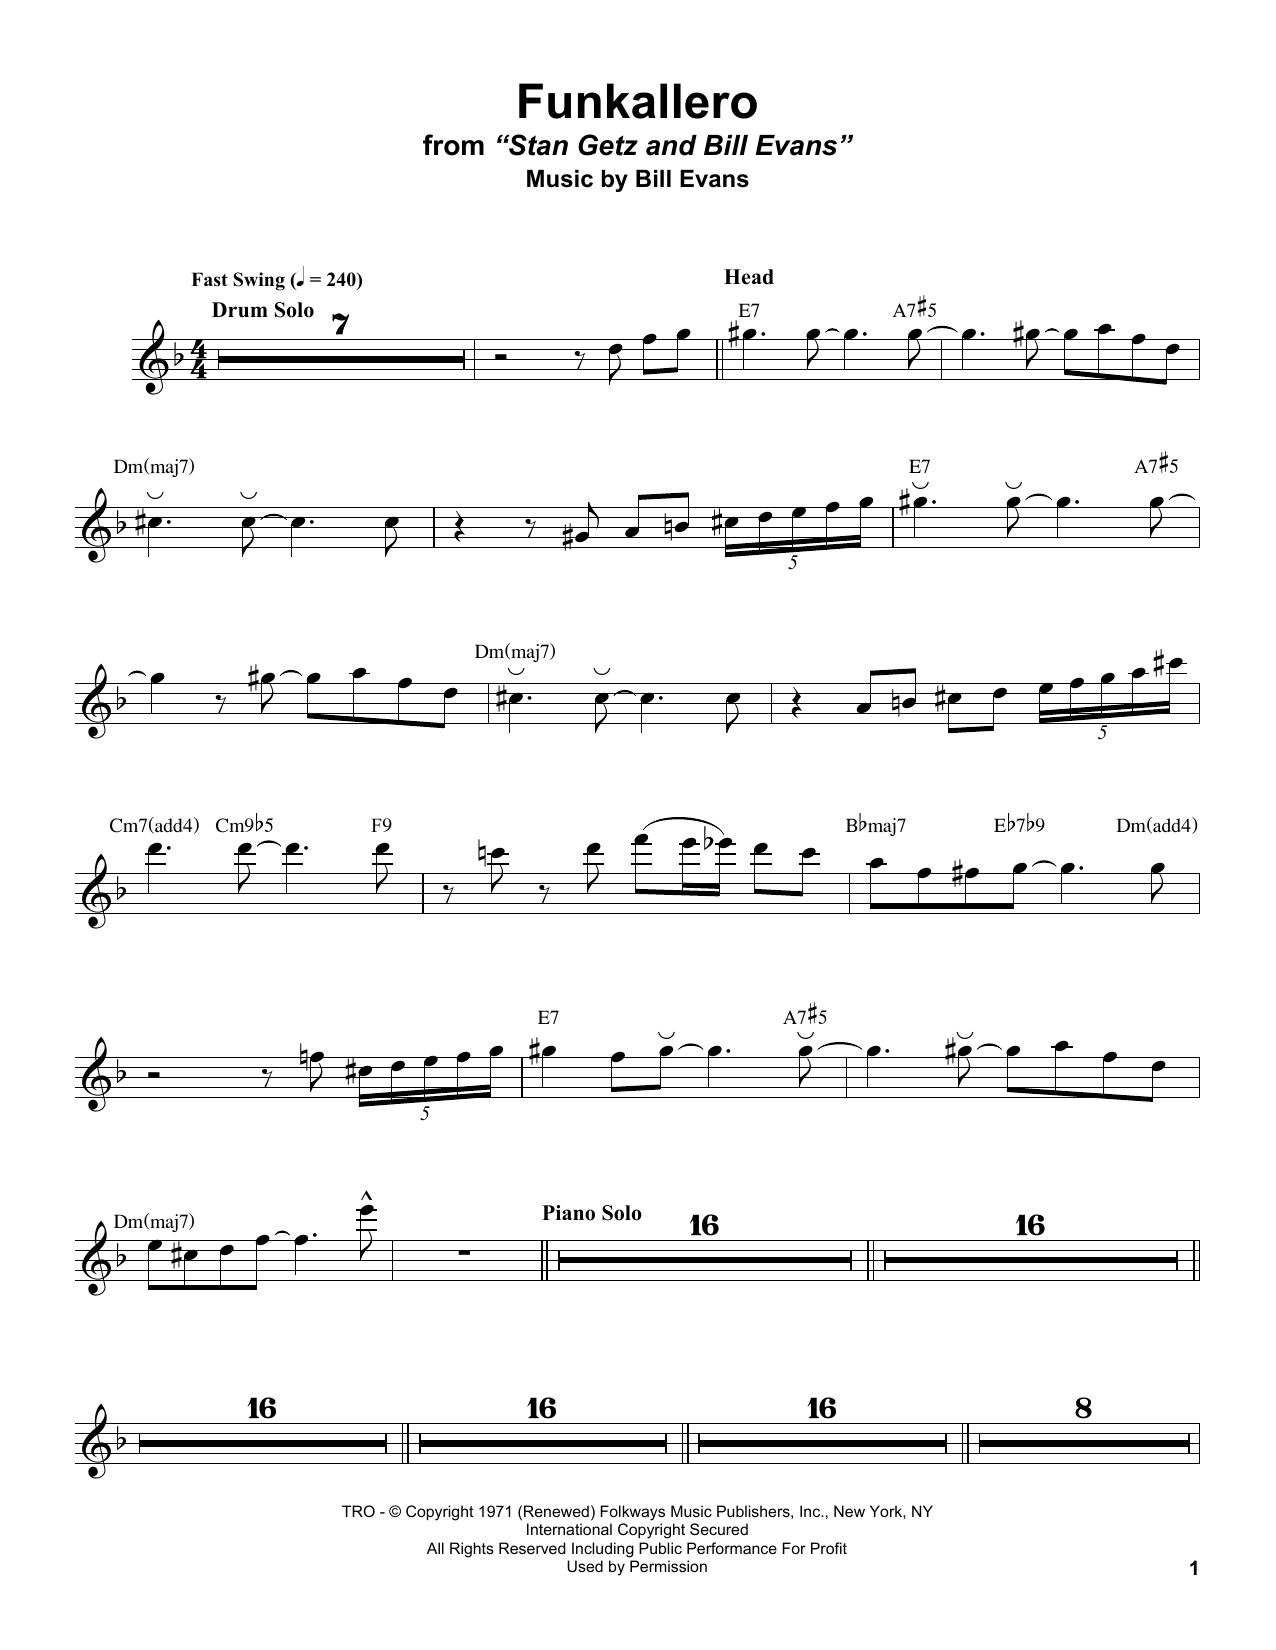 Stan Getz Funkallero Sheet Music Notes & Chords for Alto Sax Transcription - Download or Print PDF